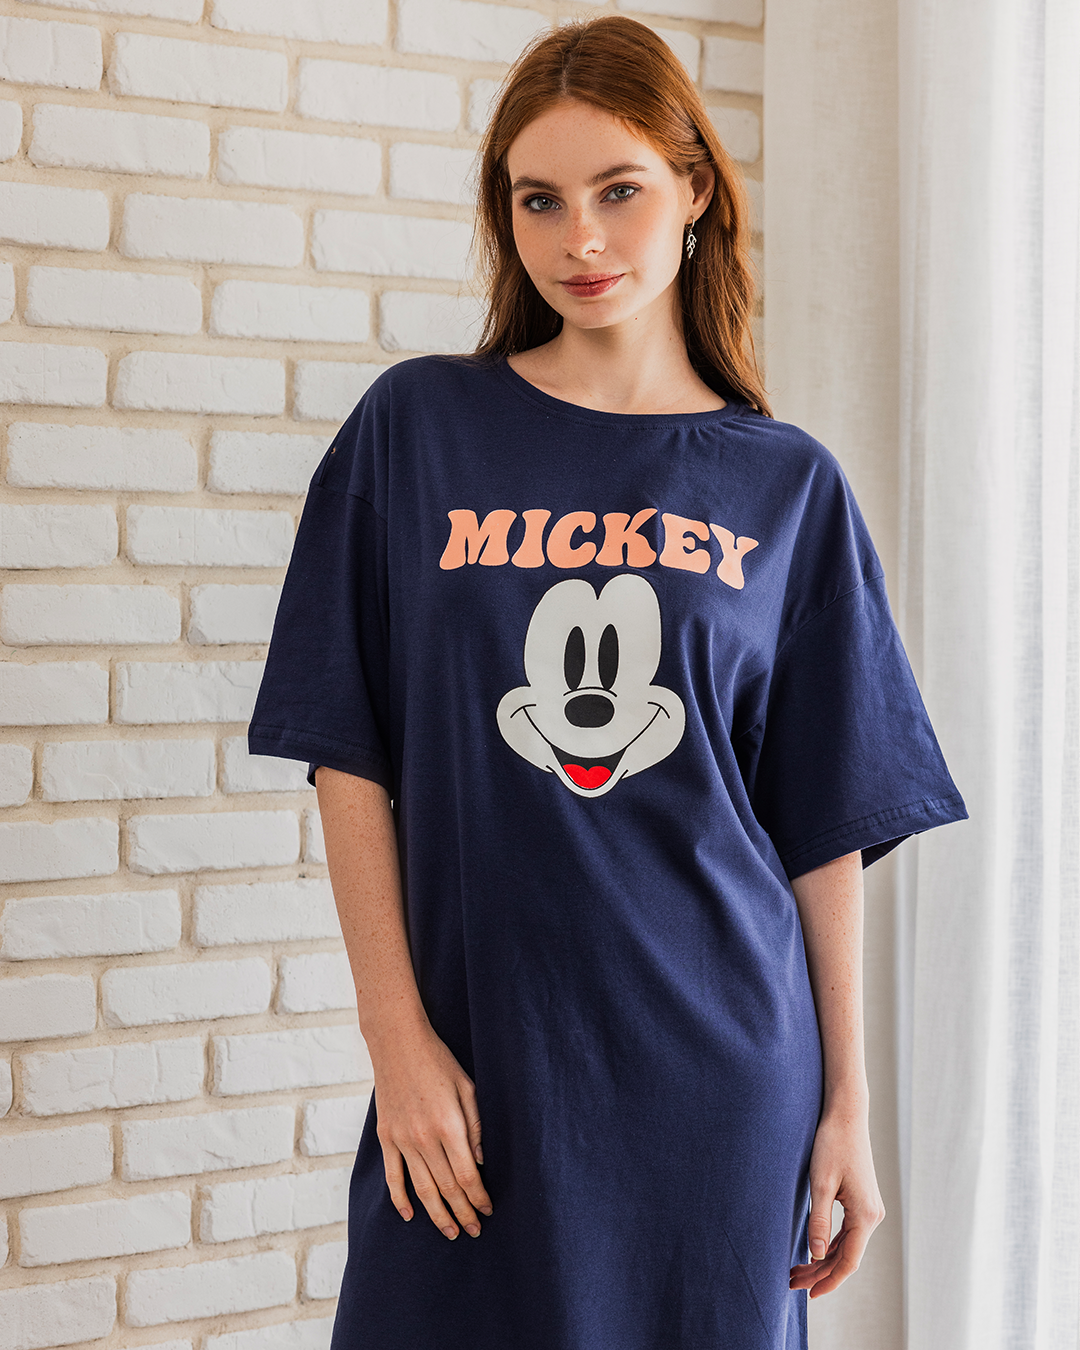 MICKEY Women's Night Shirt, Half Short Sleeve